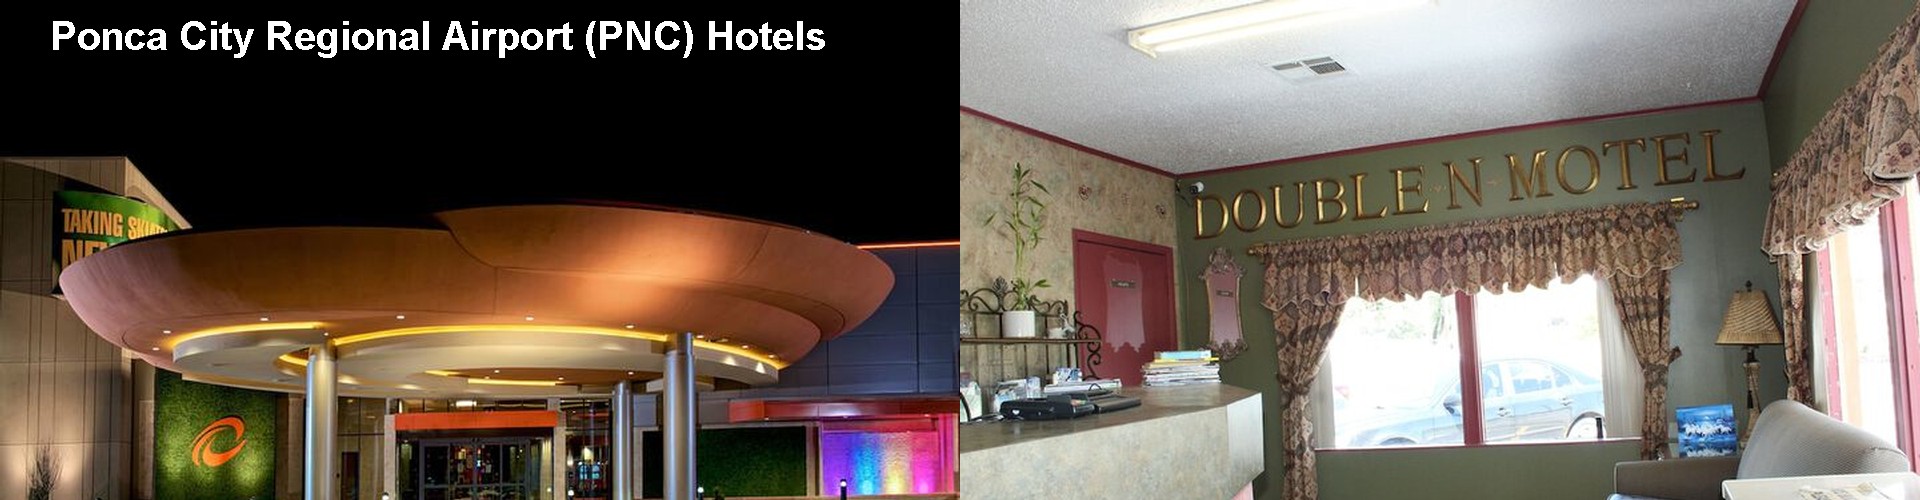 5 Best Hotels near Ponca City Regional Airport (PNC)